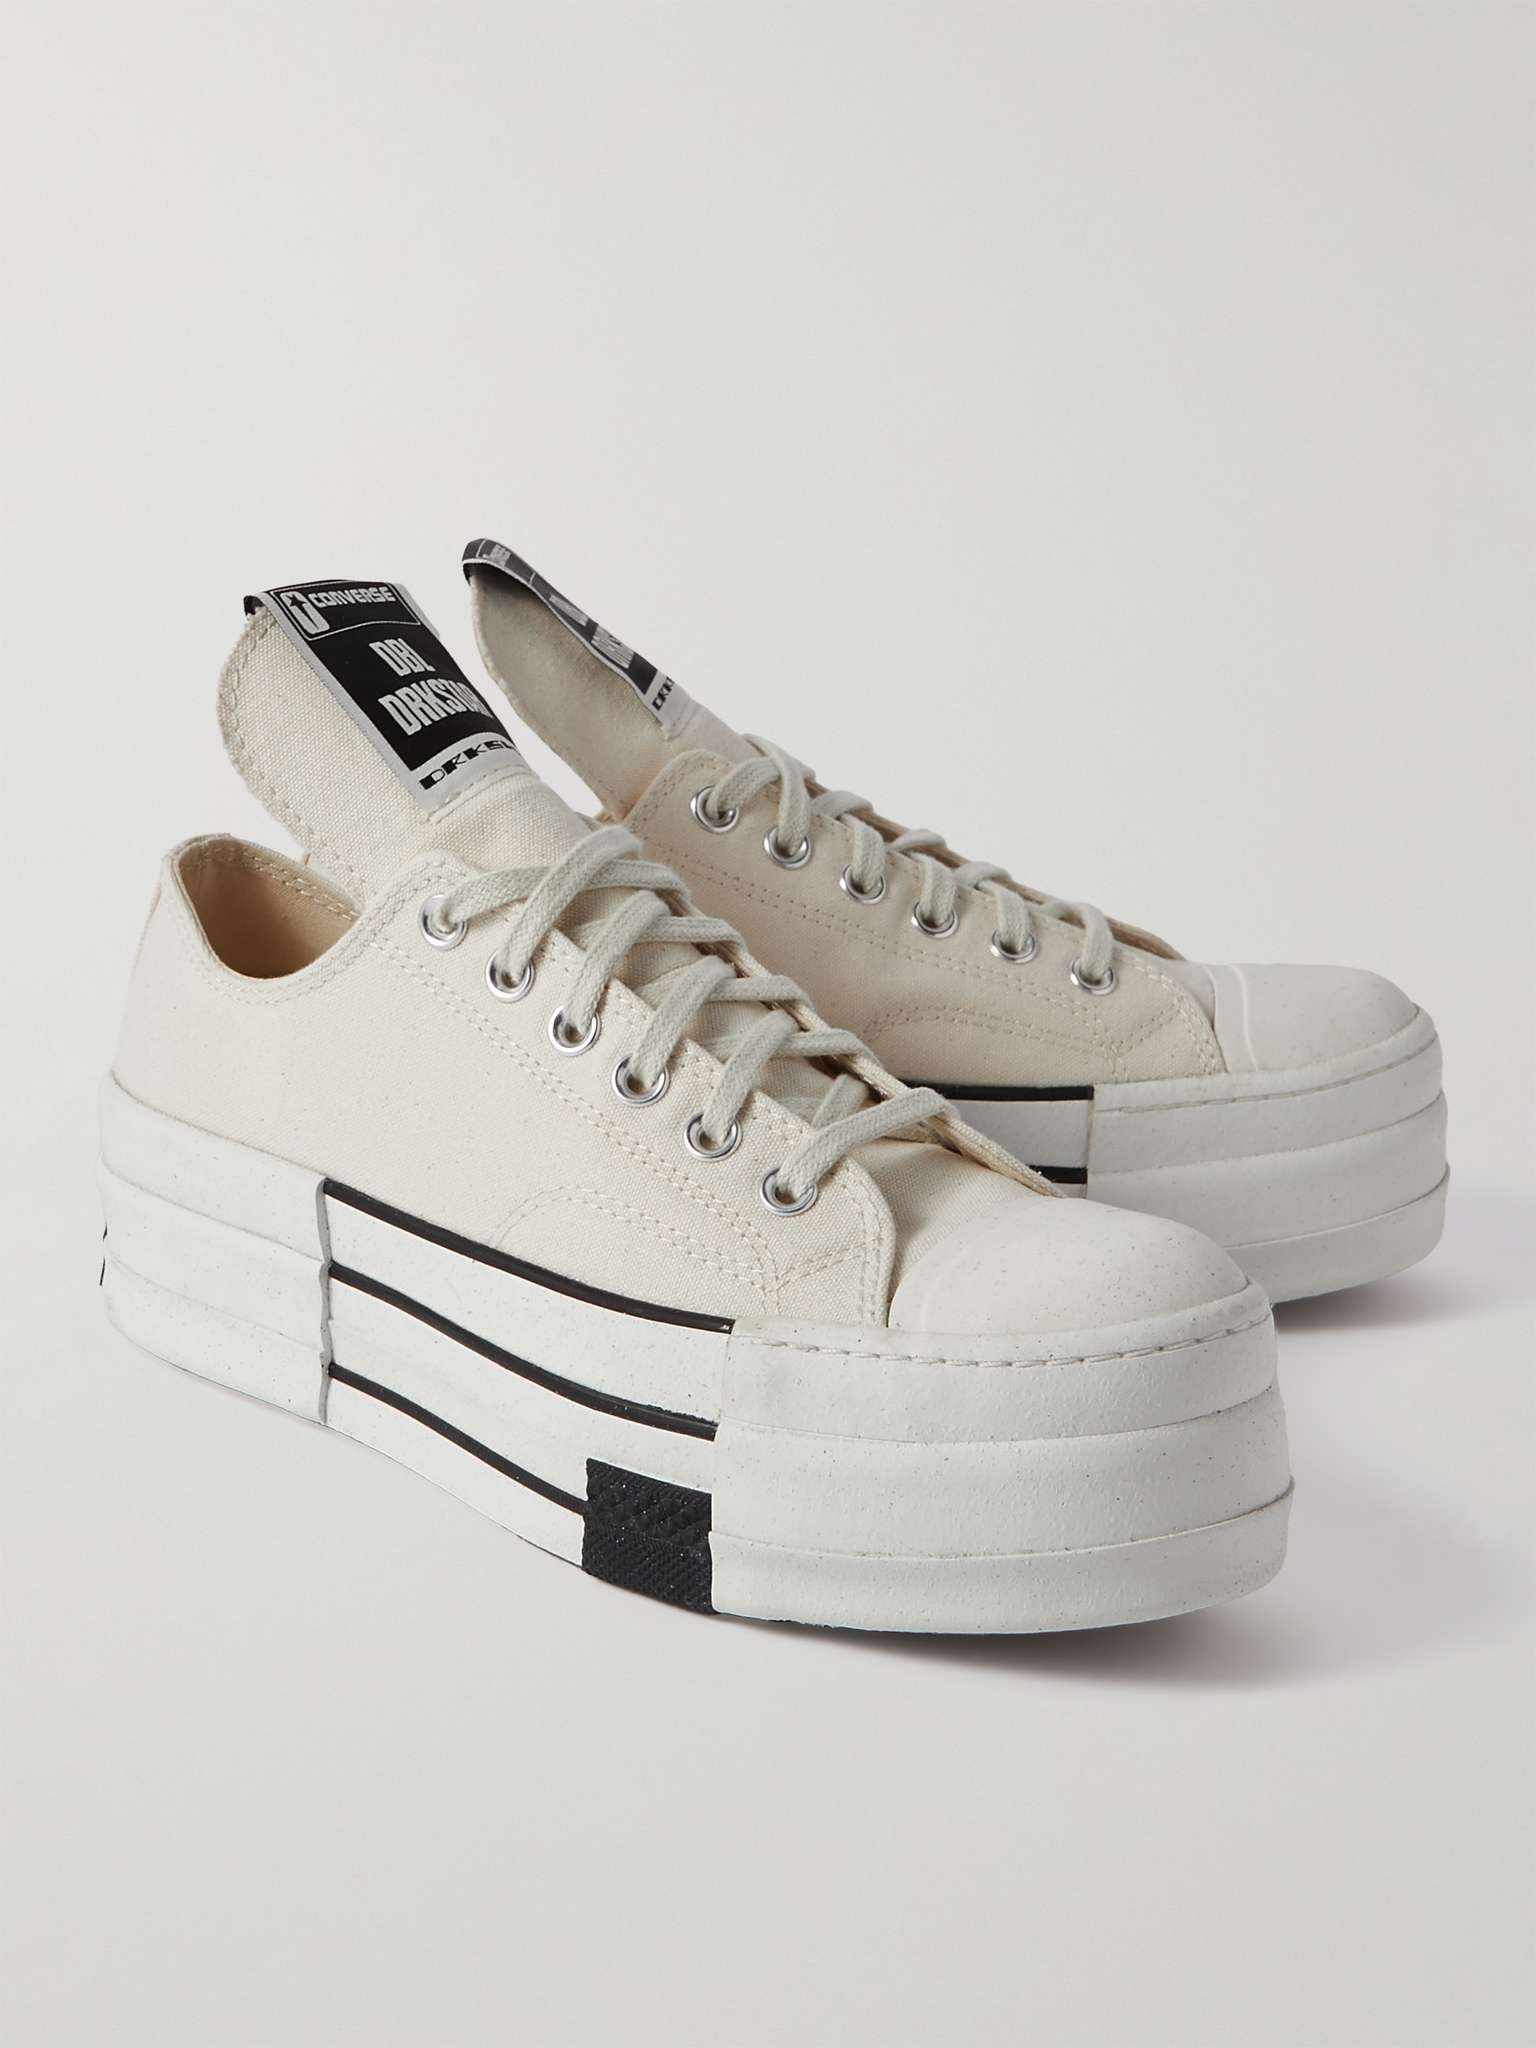 + Converse + DRKSHDW DBL DRKSTAR Chuck 70 Canvas Sneakers - 4